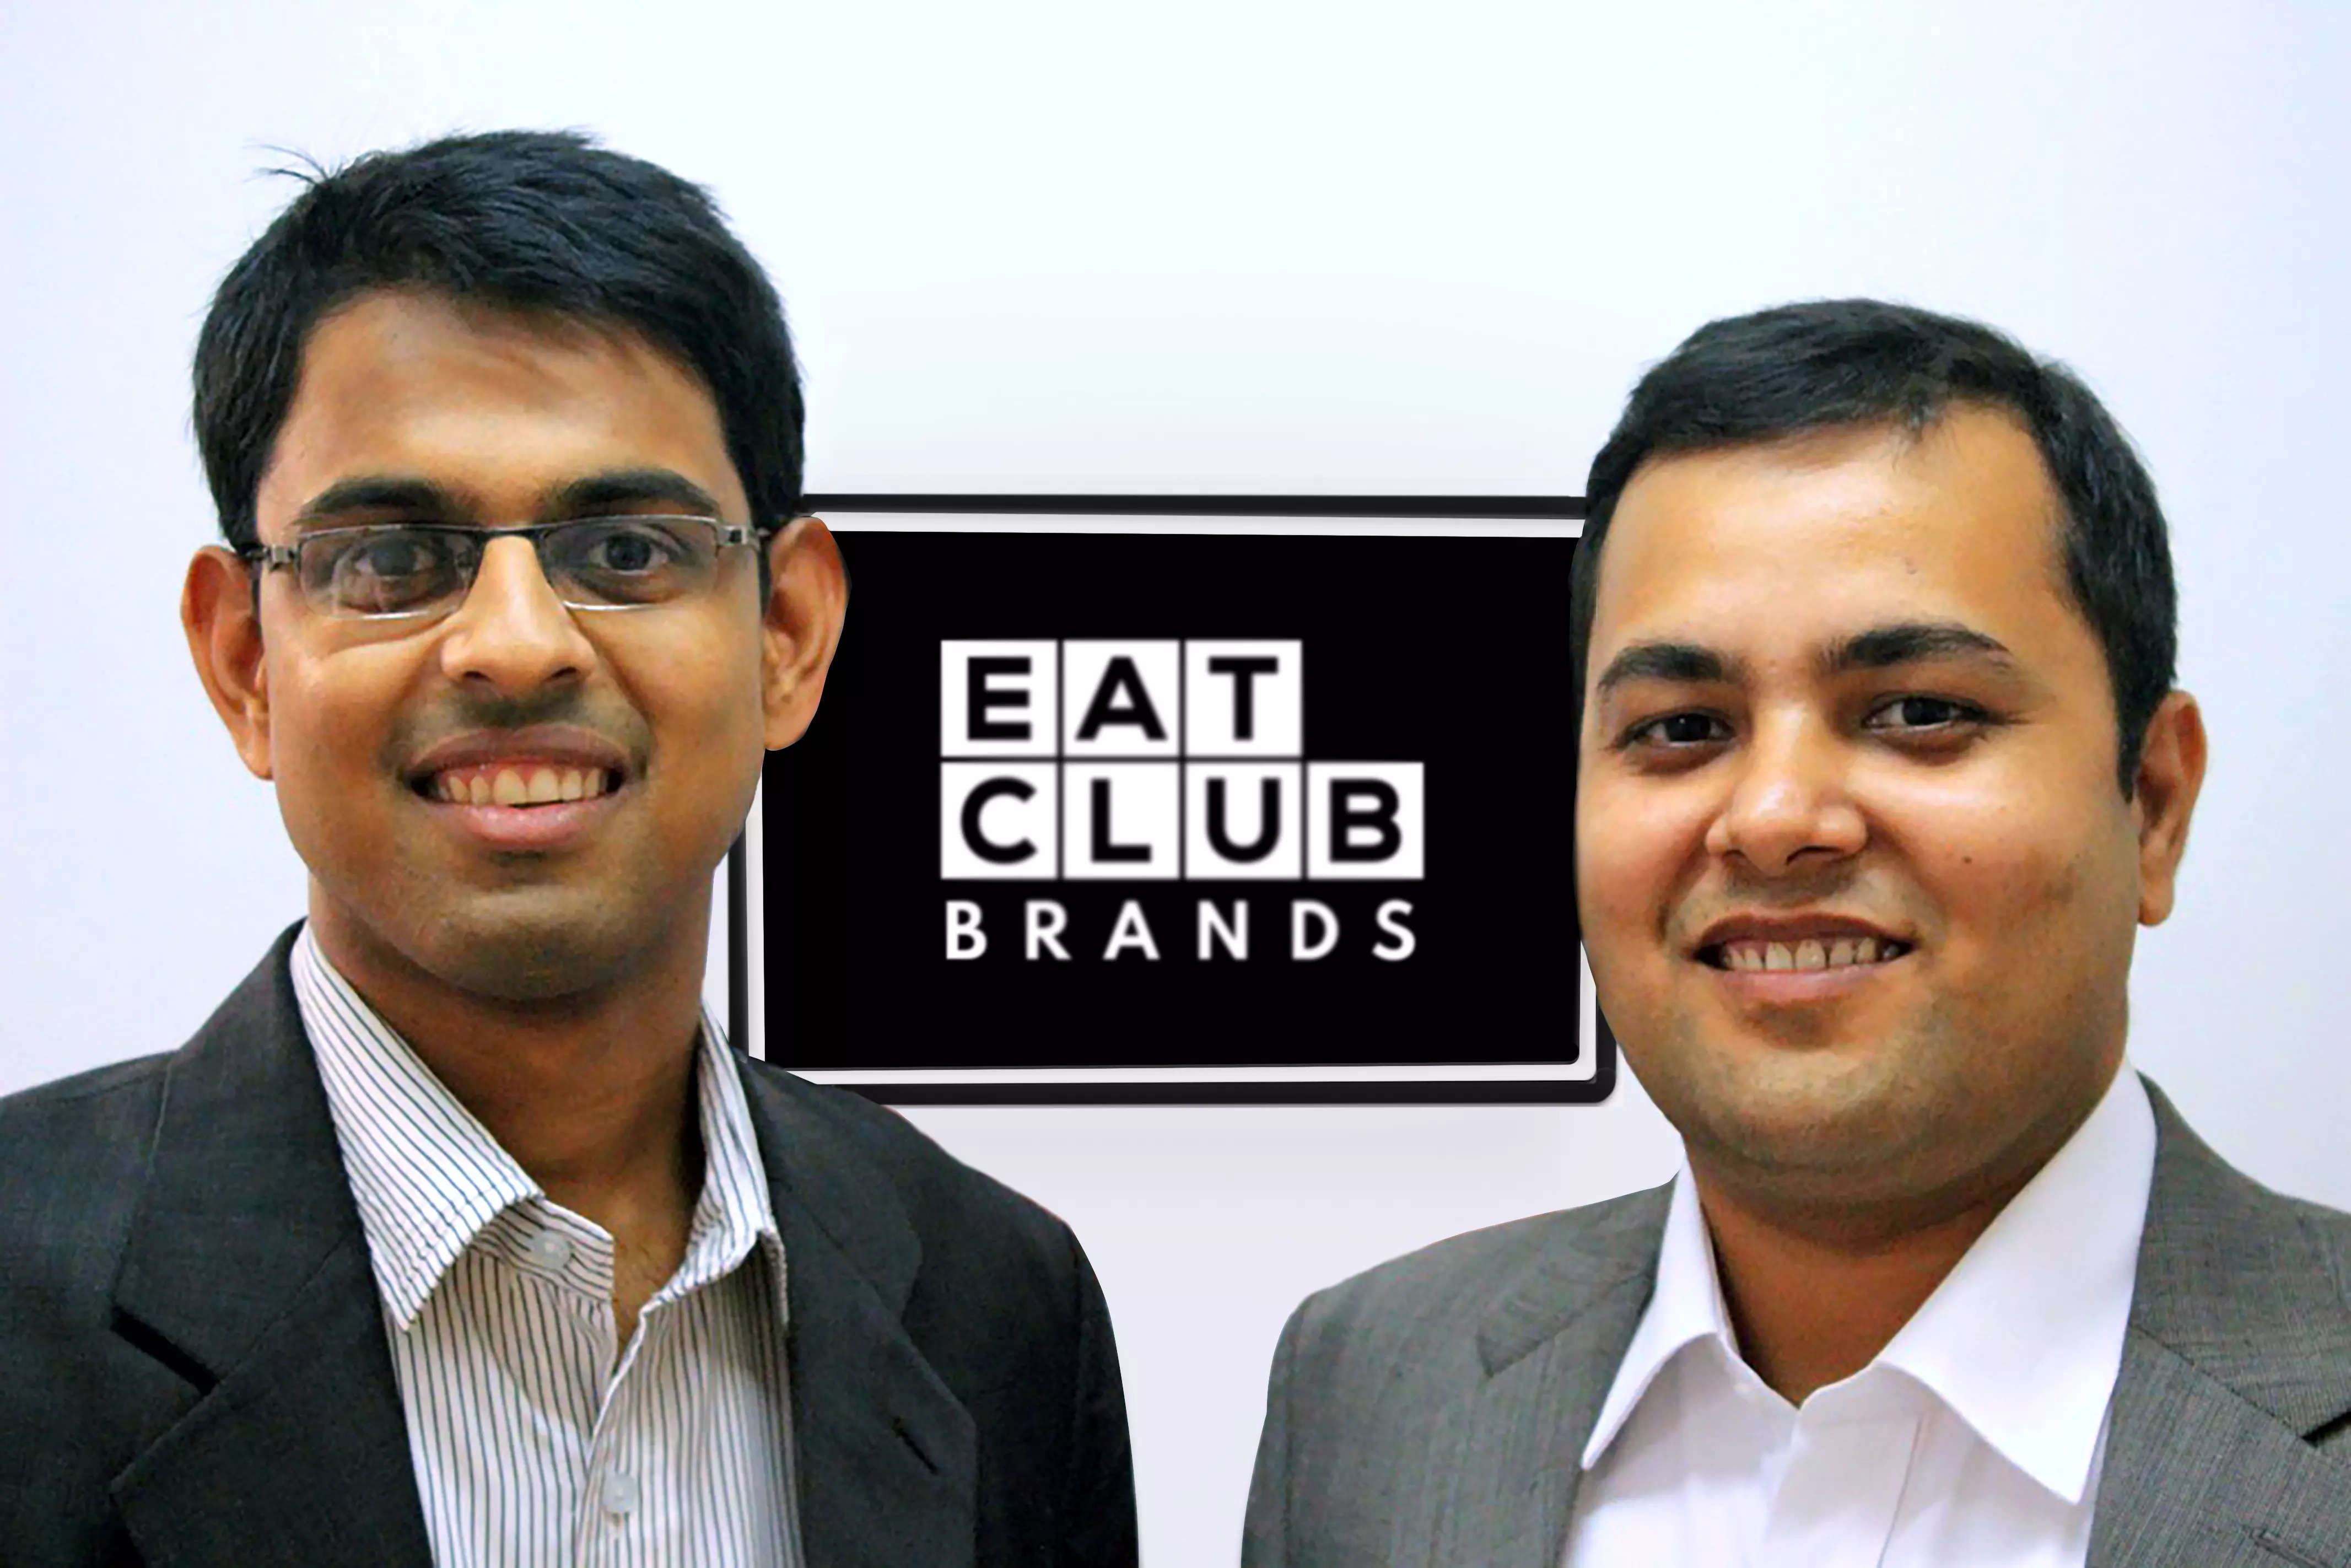  EatClub Brands cofounders Anshul Gupta and Amit Raj